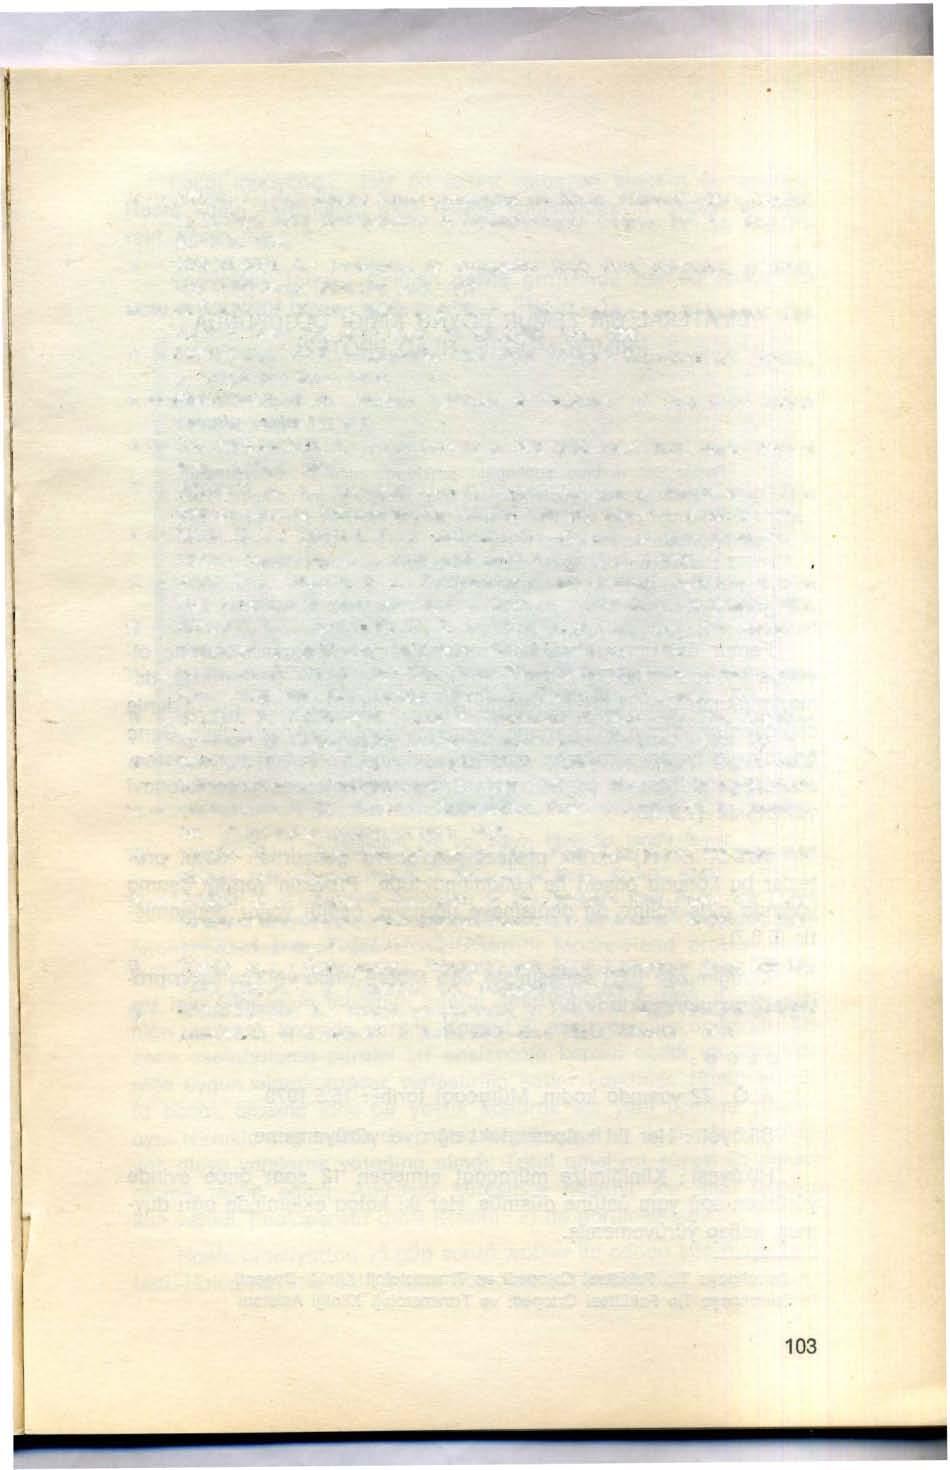 2 - AYRAL, F.: Pes Equino Varus Congenitus'da Tanım, Etimoloii, Oluş Teorileri ve Tarihçe. Acta Orthapaedica et Traumatologica Turcica. Vol. VII, Sayı 1-4, S. 12-29, 1973. 3 - BERTELSEN, A.